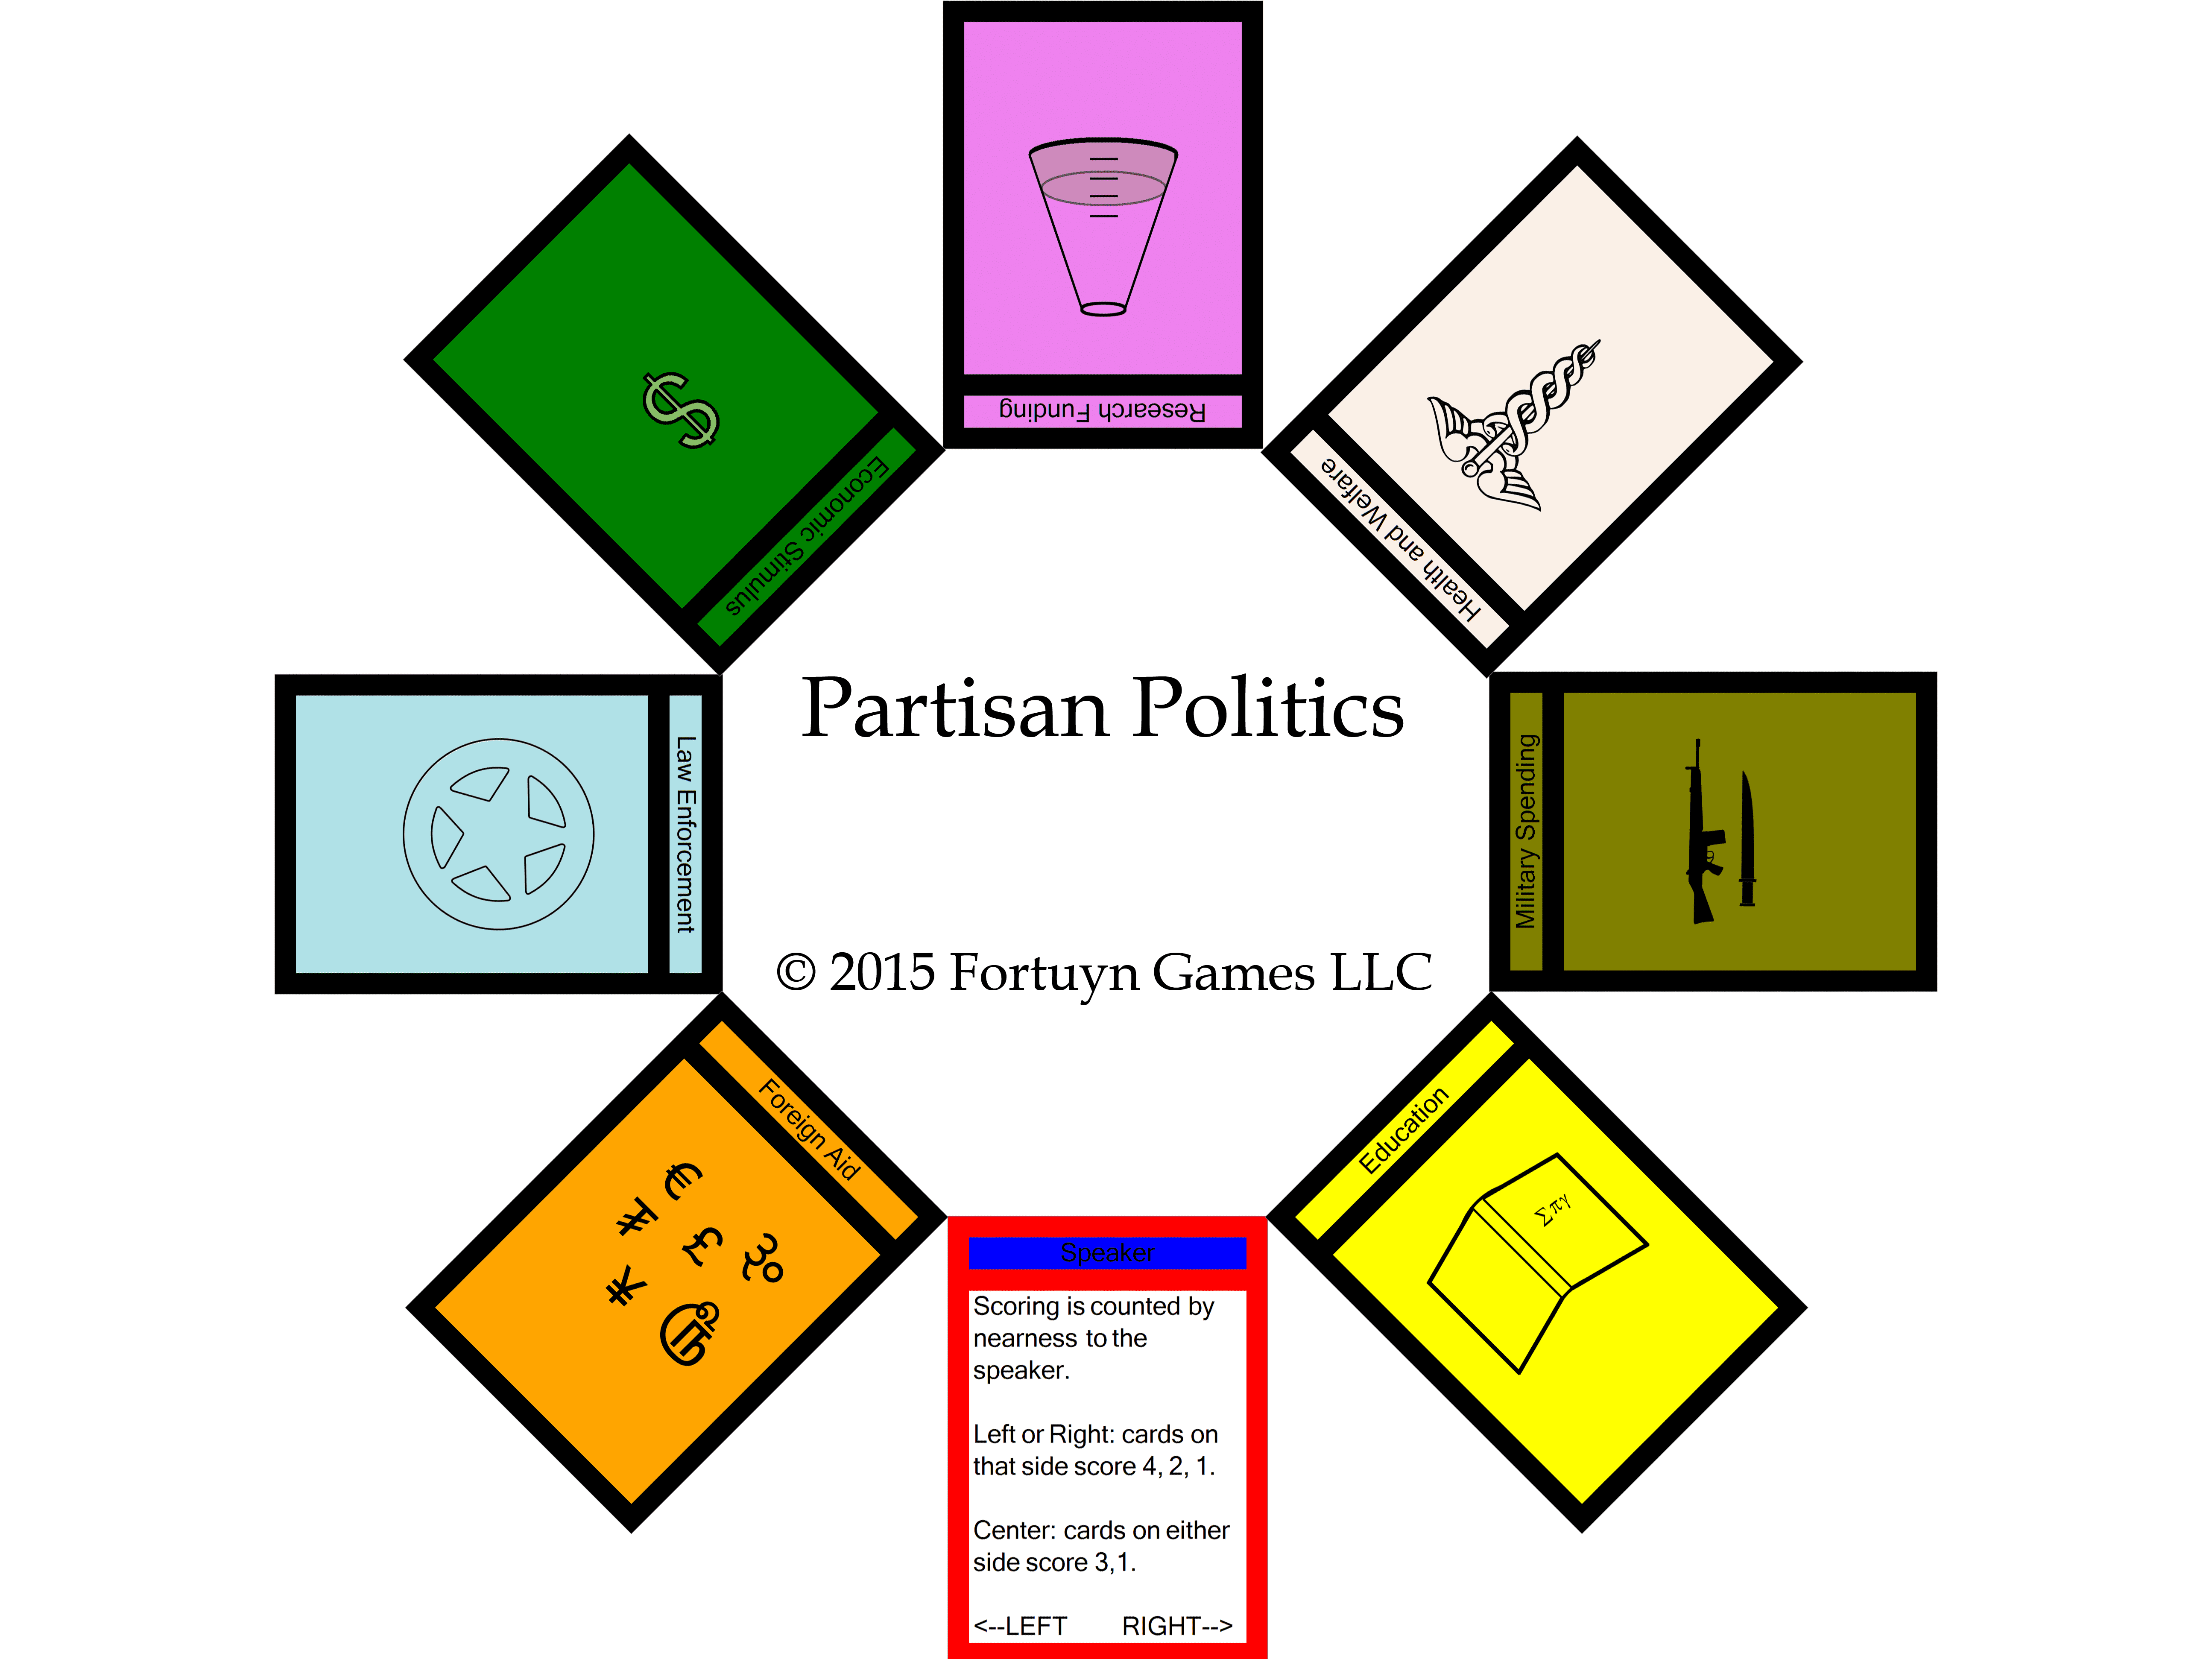 Partisan Politics